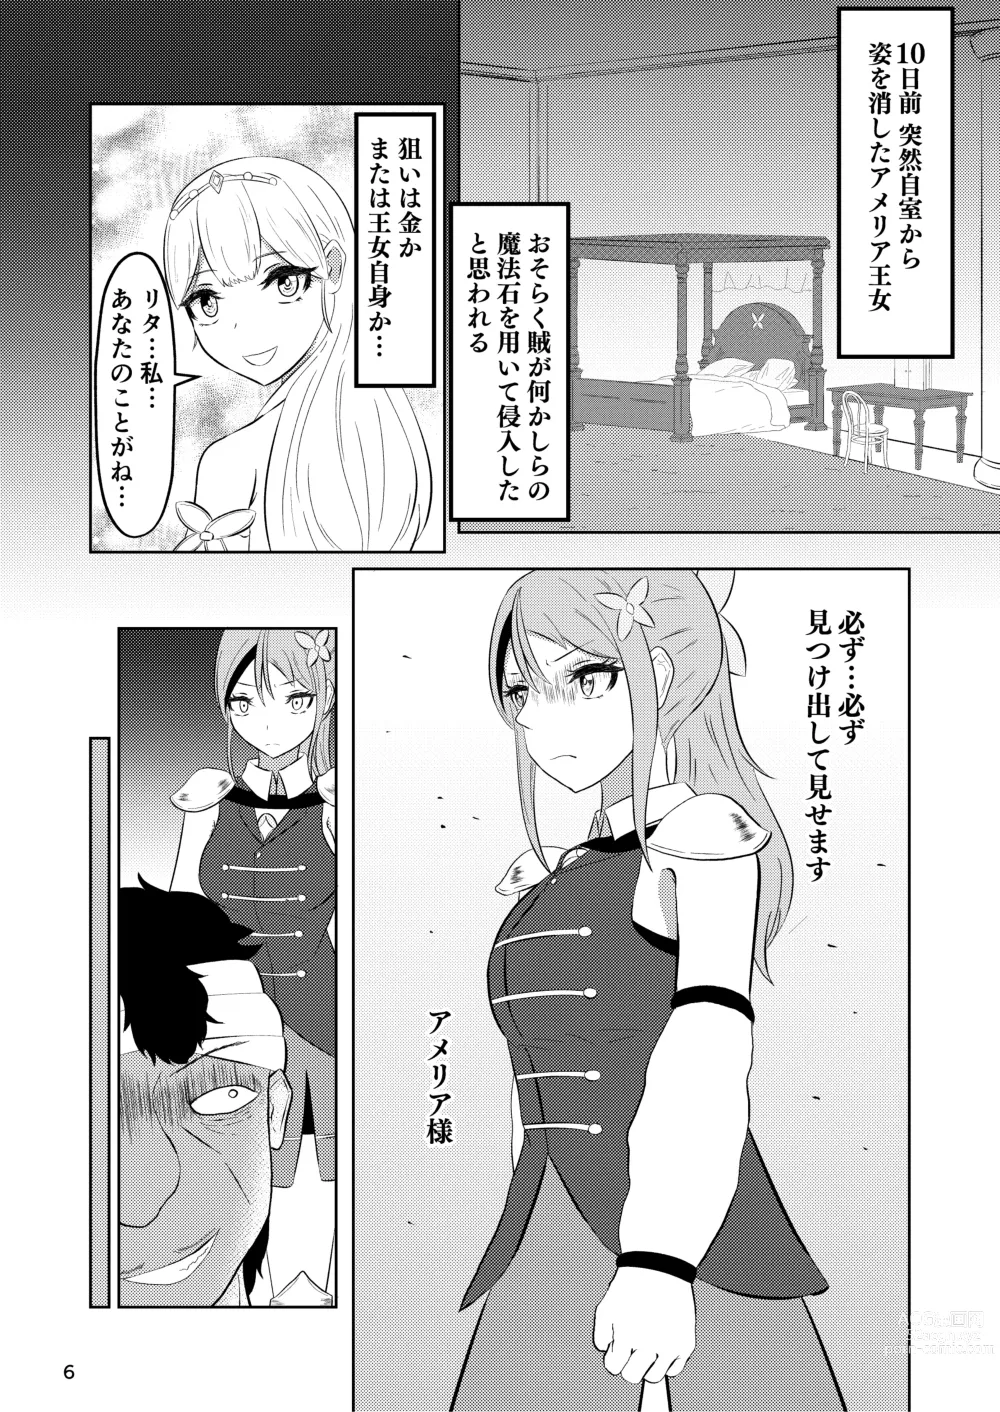 Page 5 of doujinshi Hime to Kishi  wa Nukarumi ni Kawaru